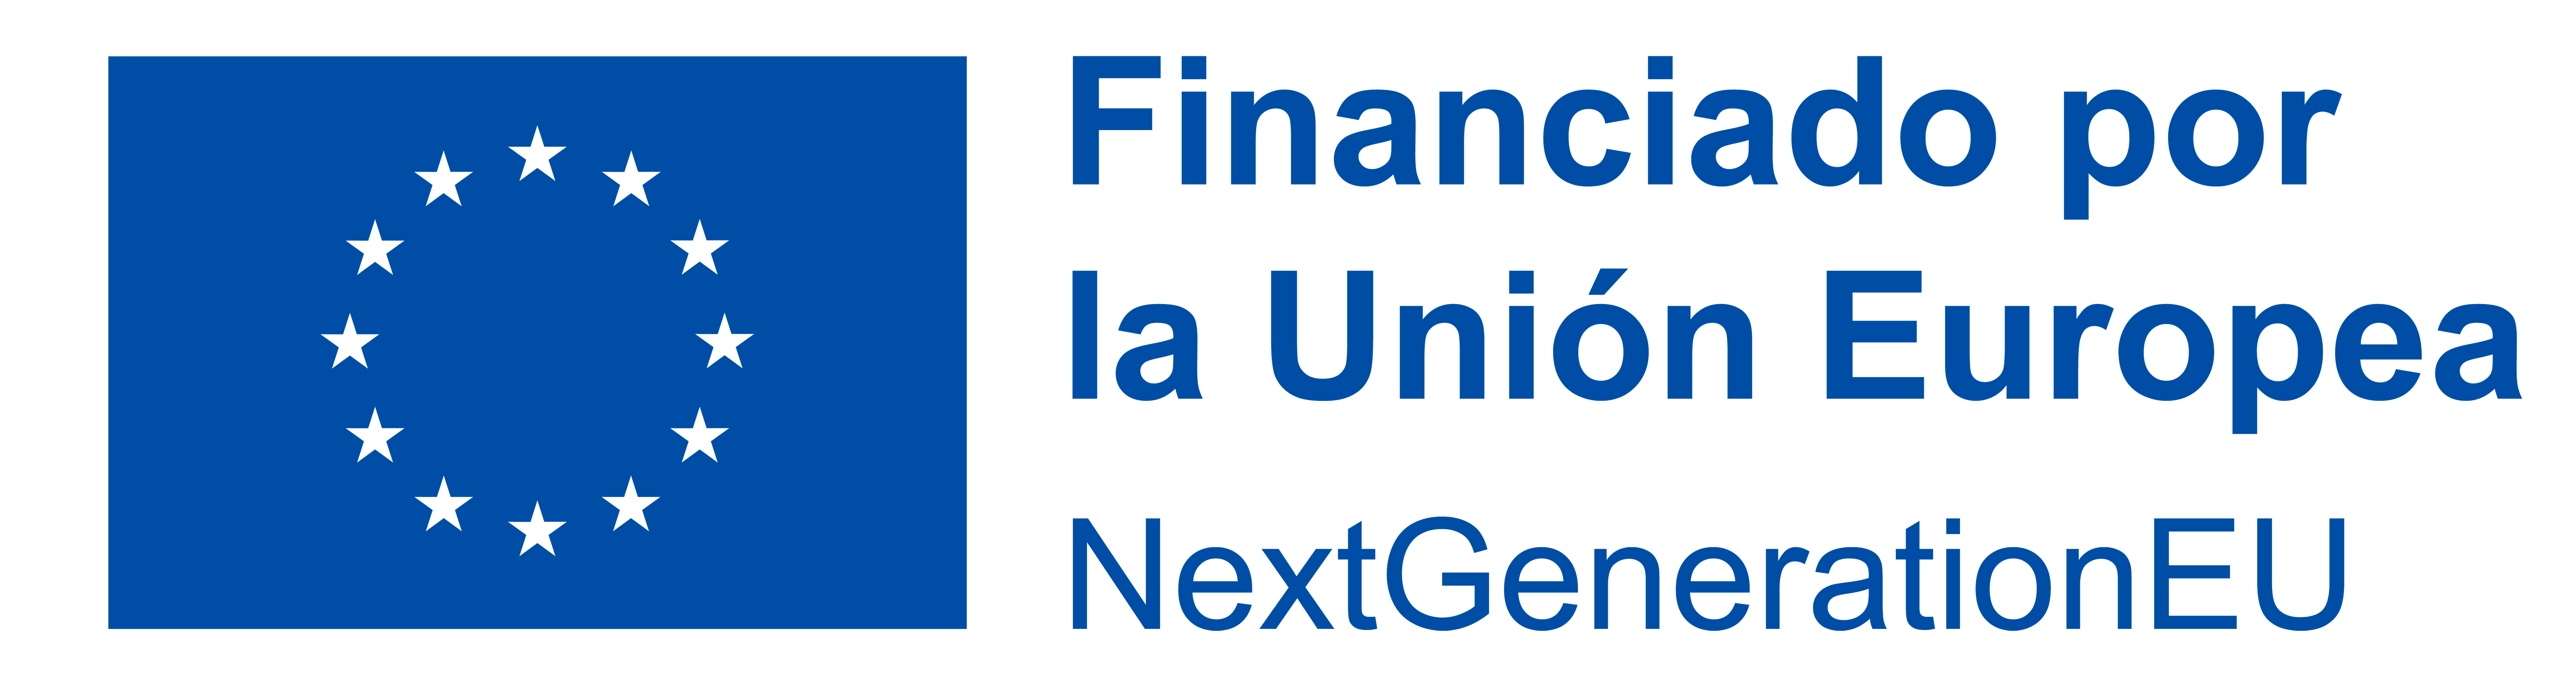 Logotipo U.E. - Next Generation